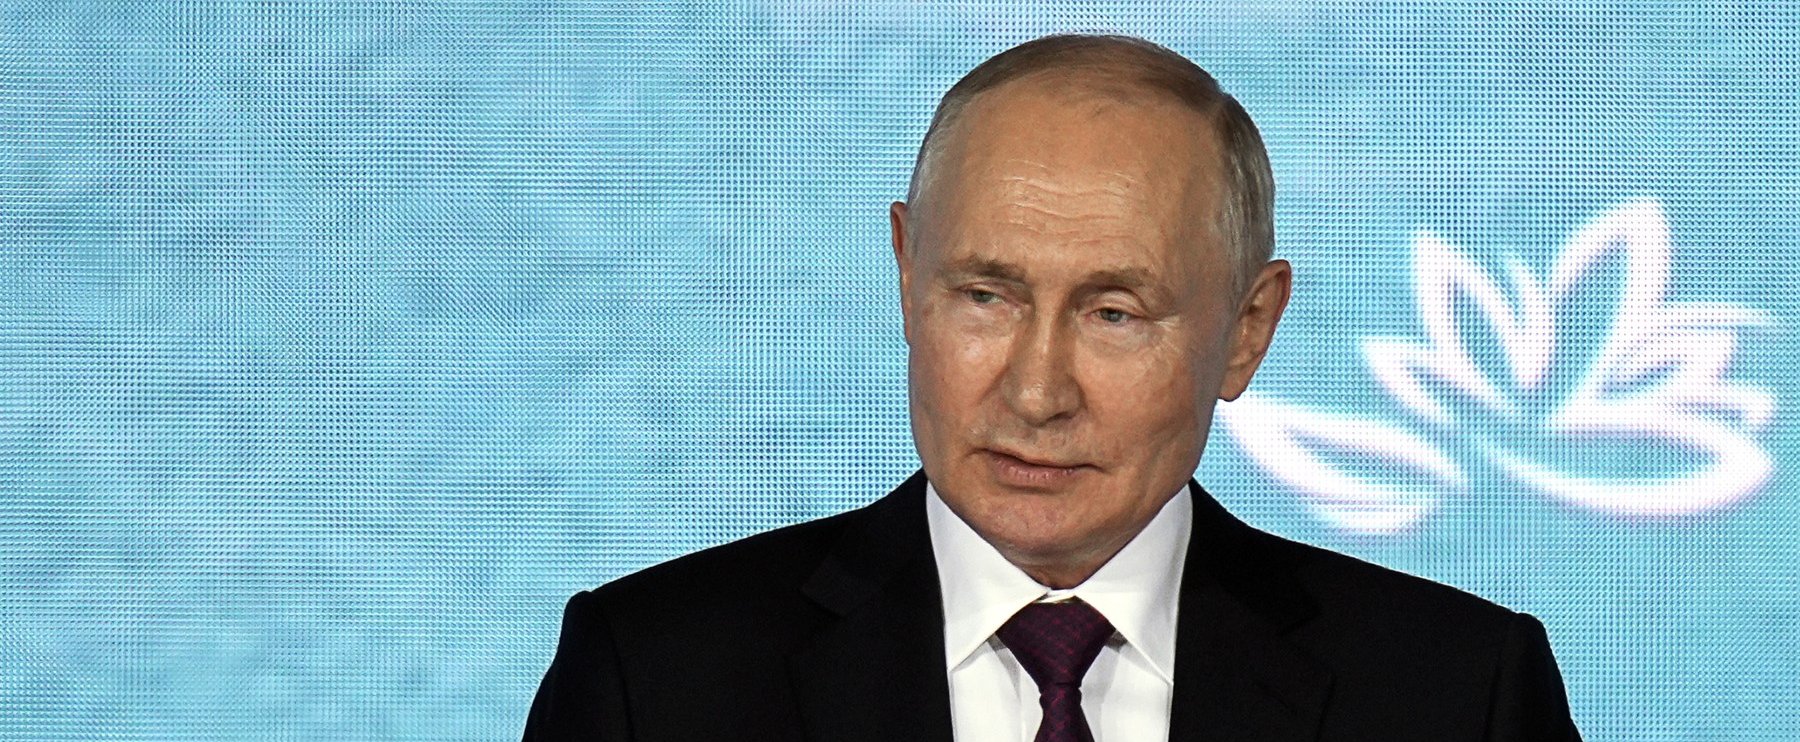 Putyin végre beismerte: hiba volt